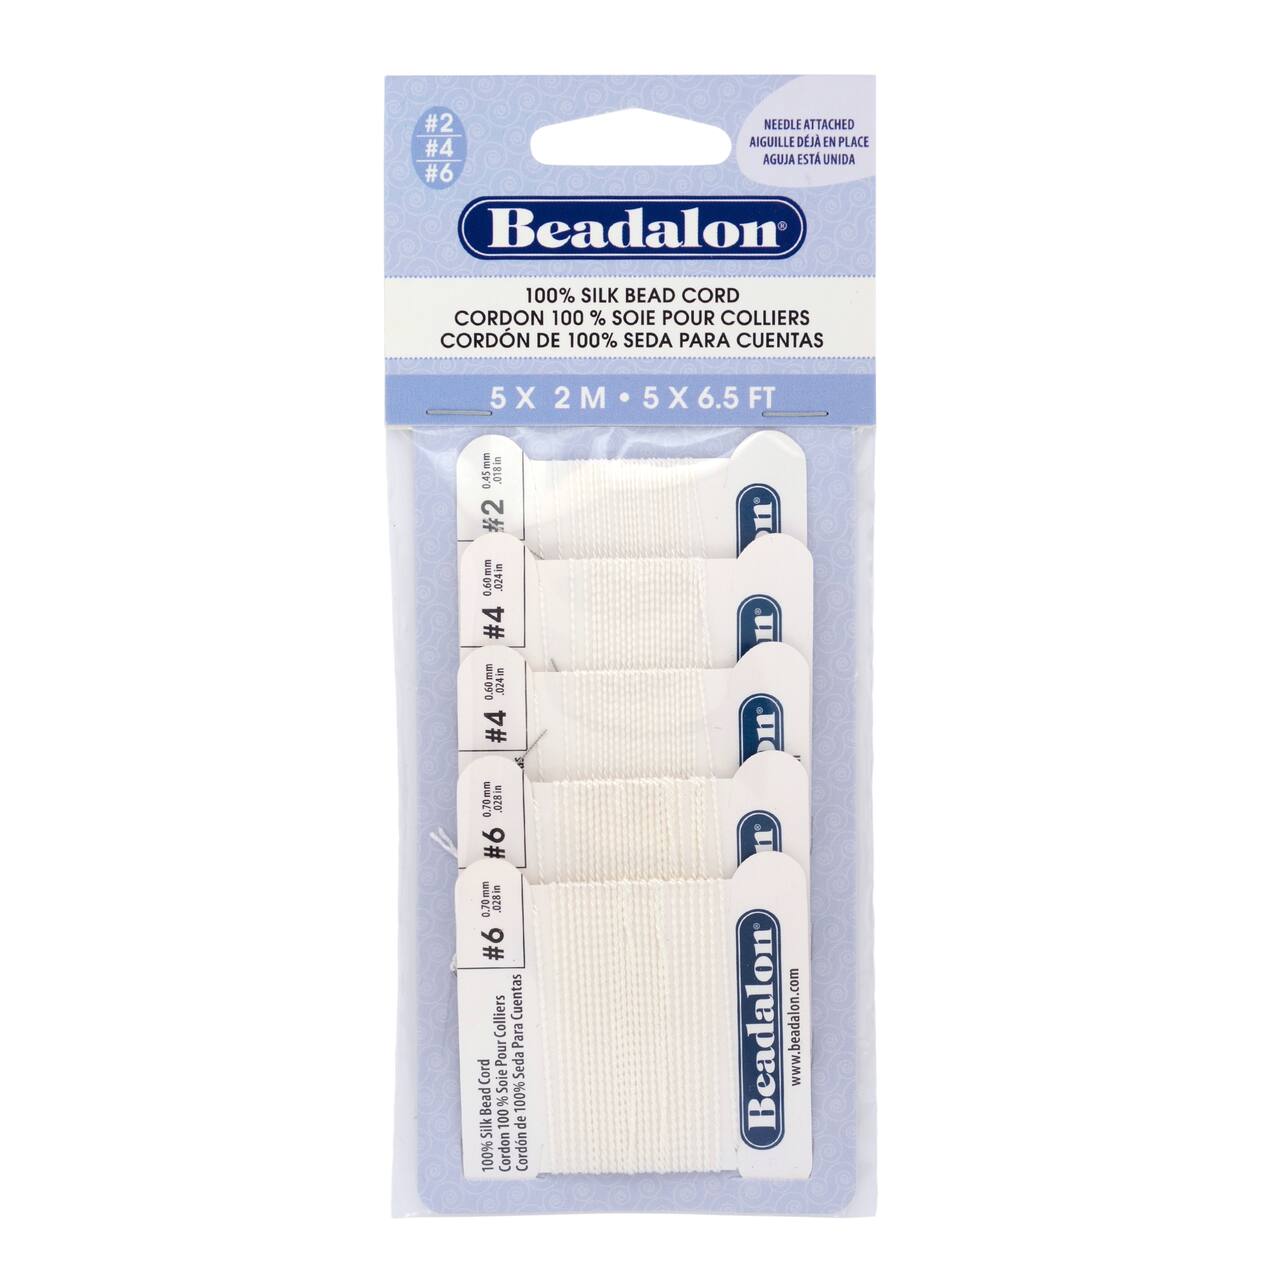 Beadalon® 100% Silk Bead Cord Variety Pack, White